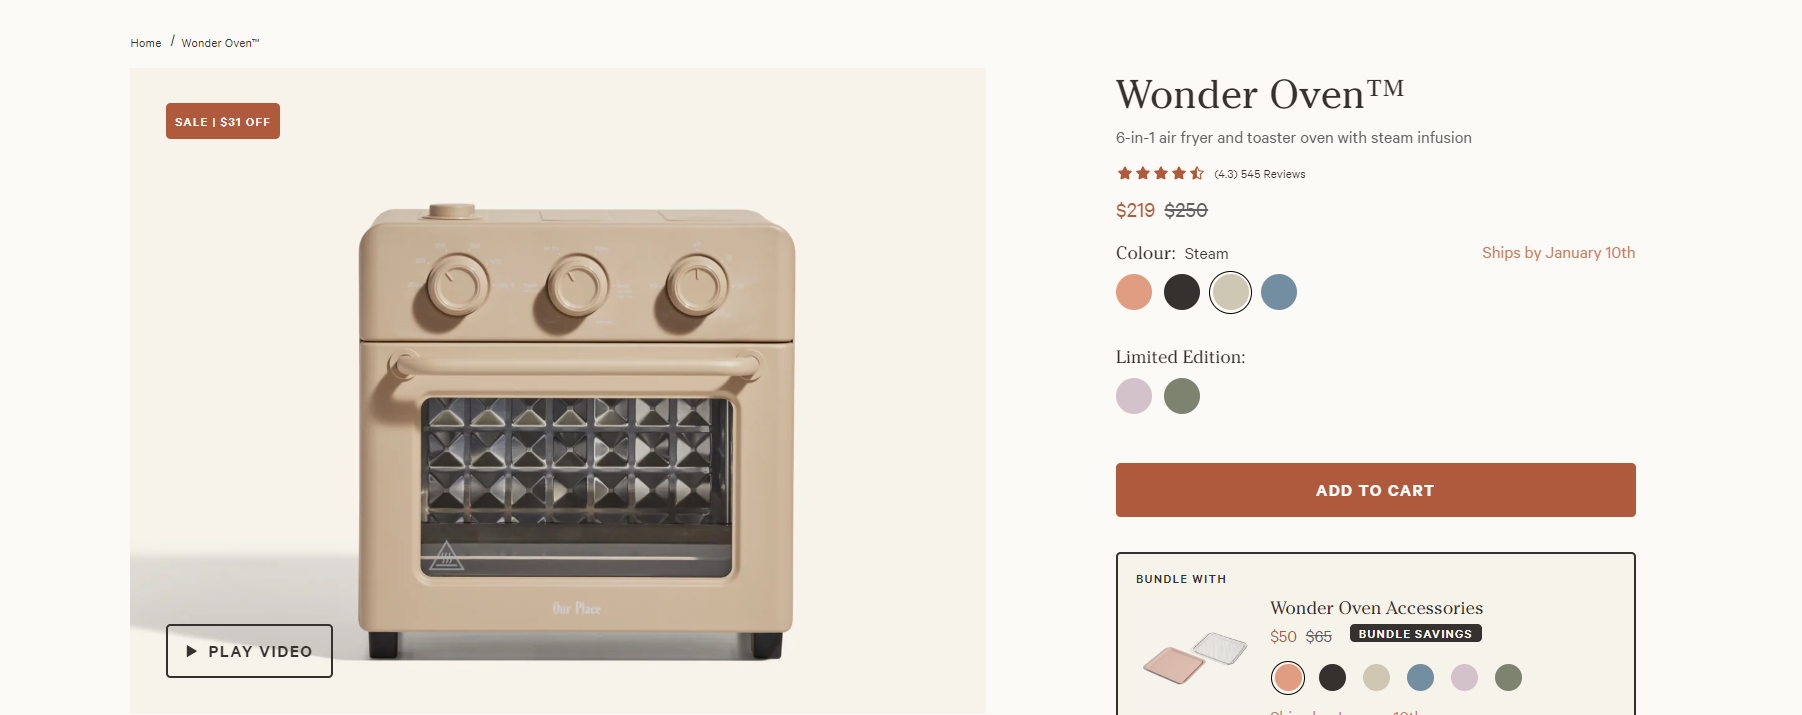 the wonder over luxury kitchen gift idea